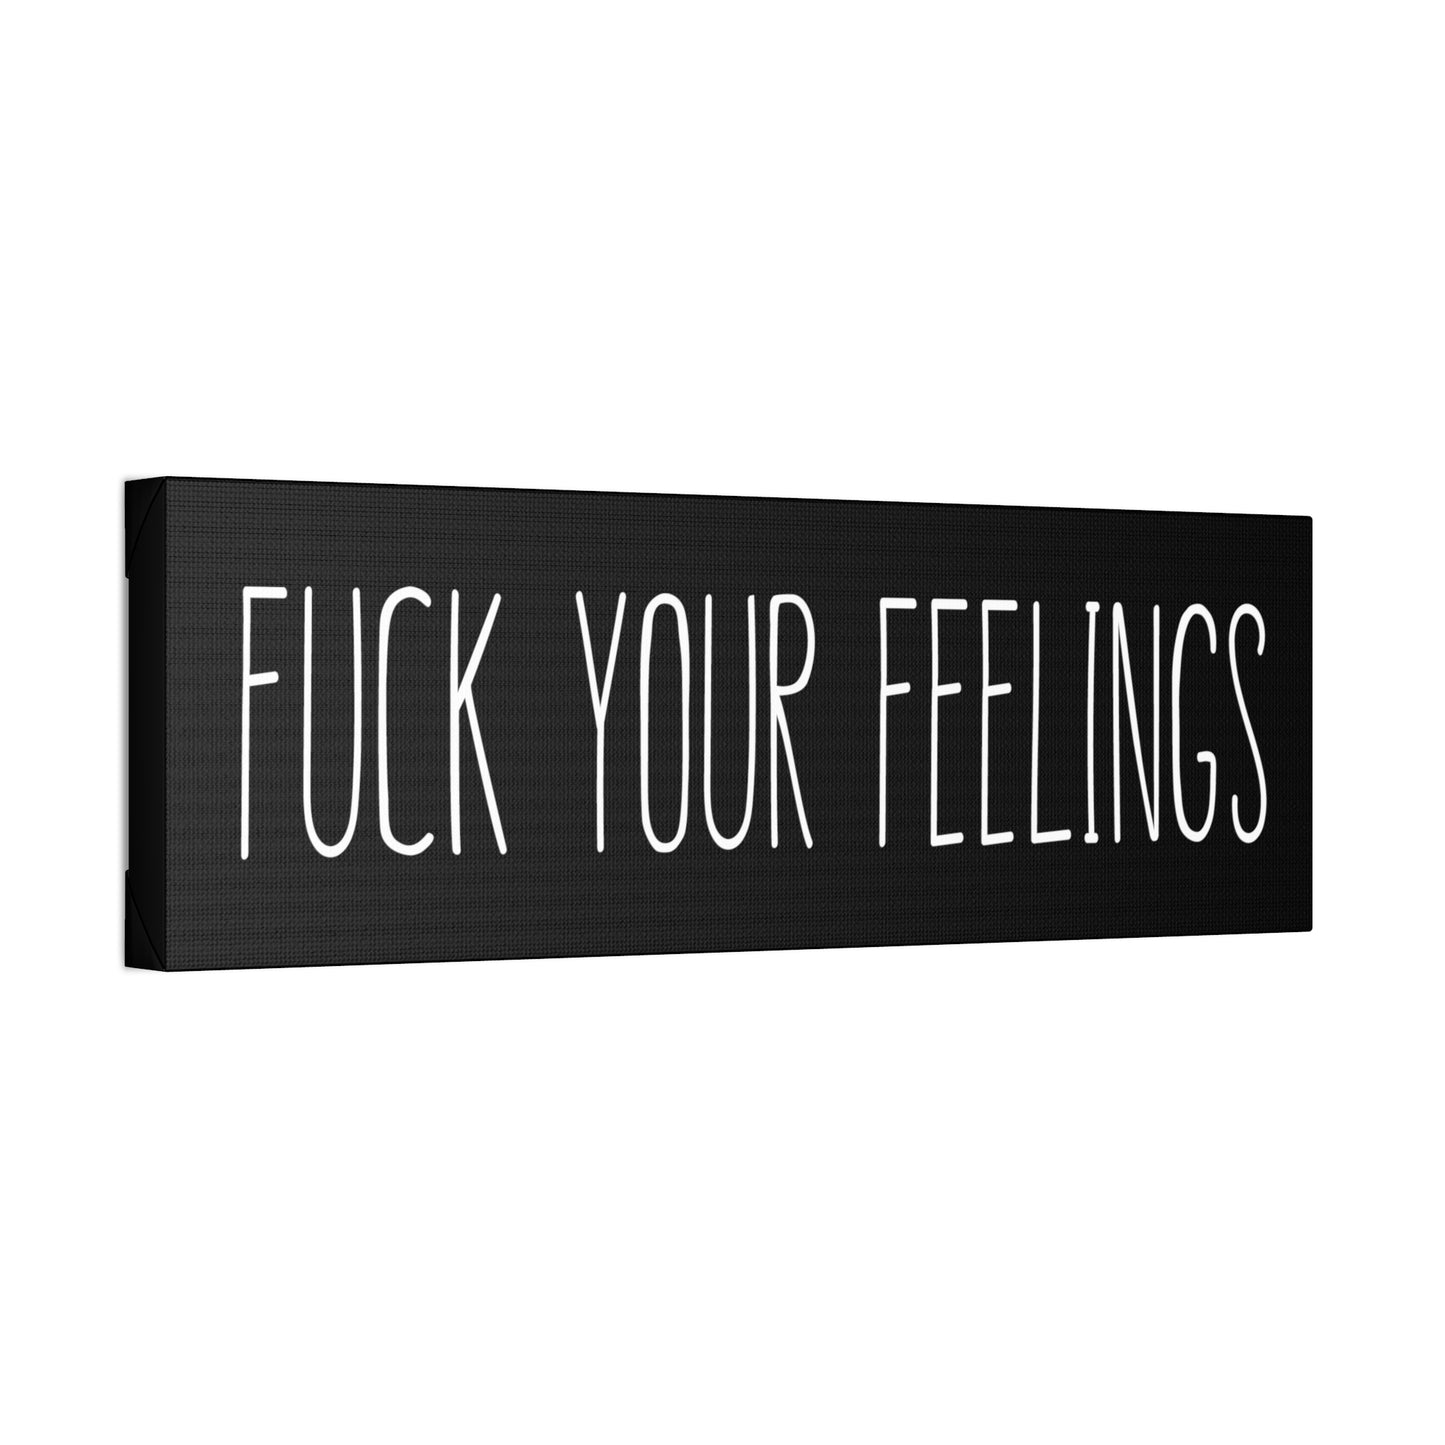 Fuck Your Feelings - Black Canvas